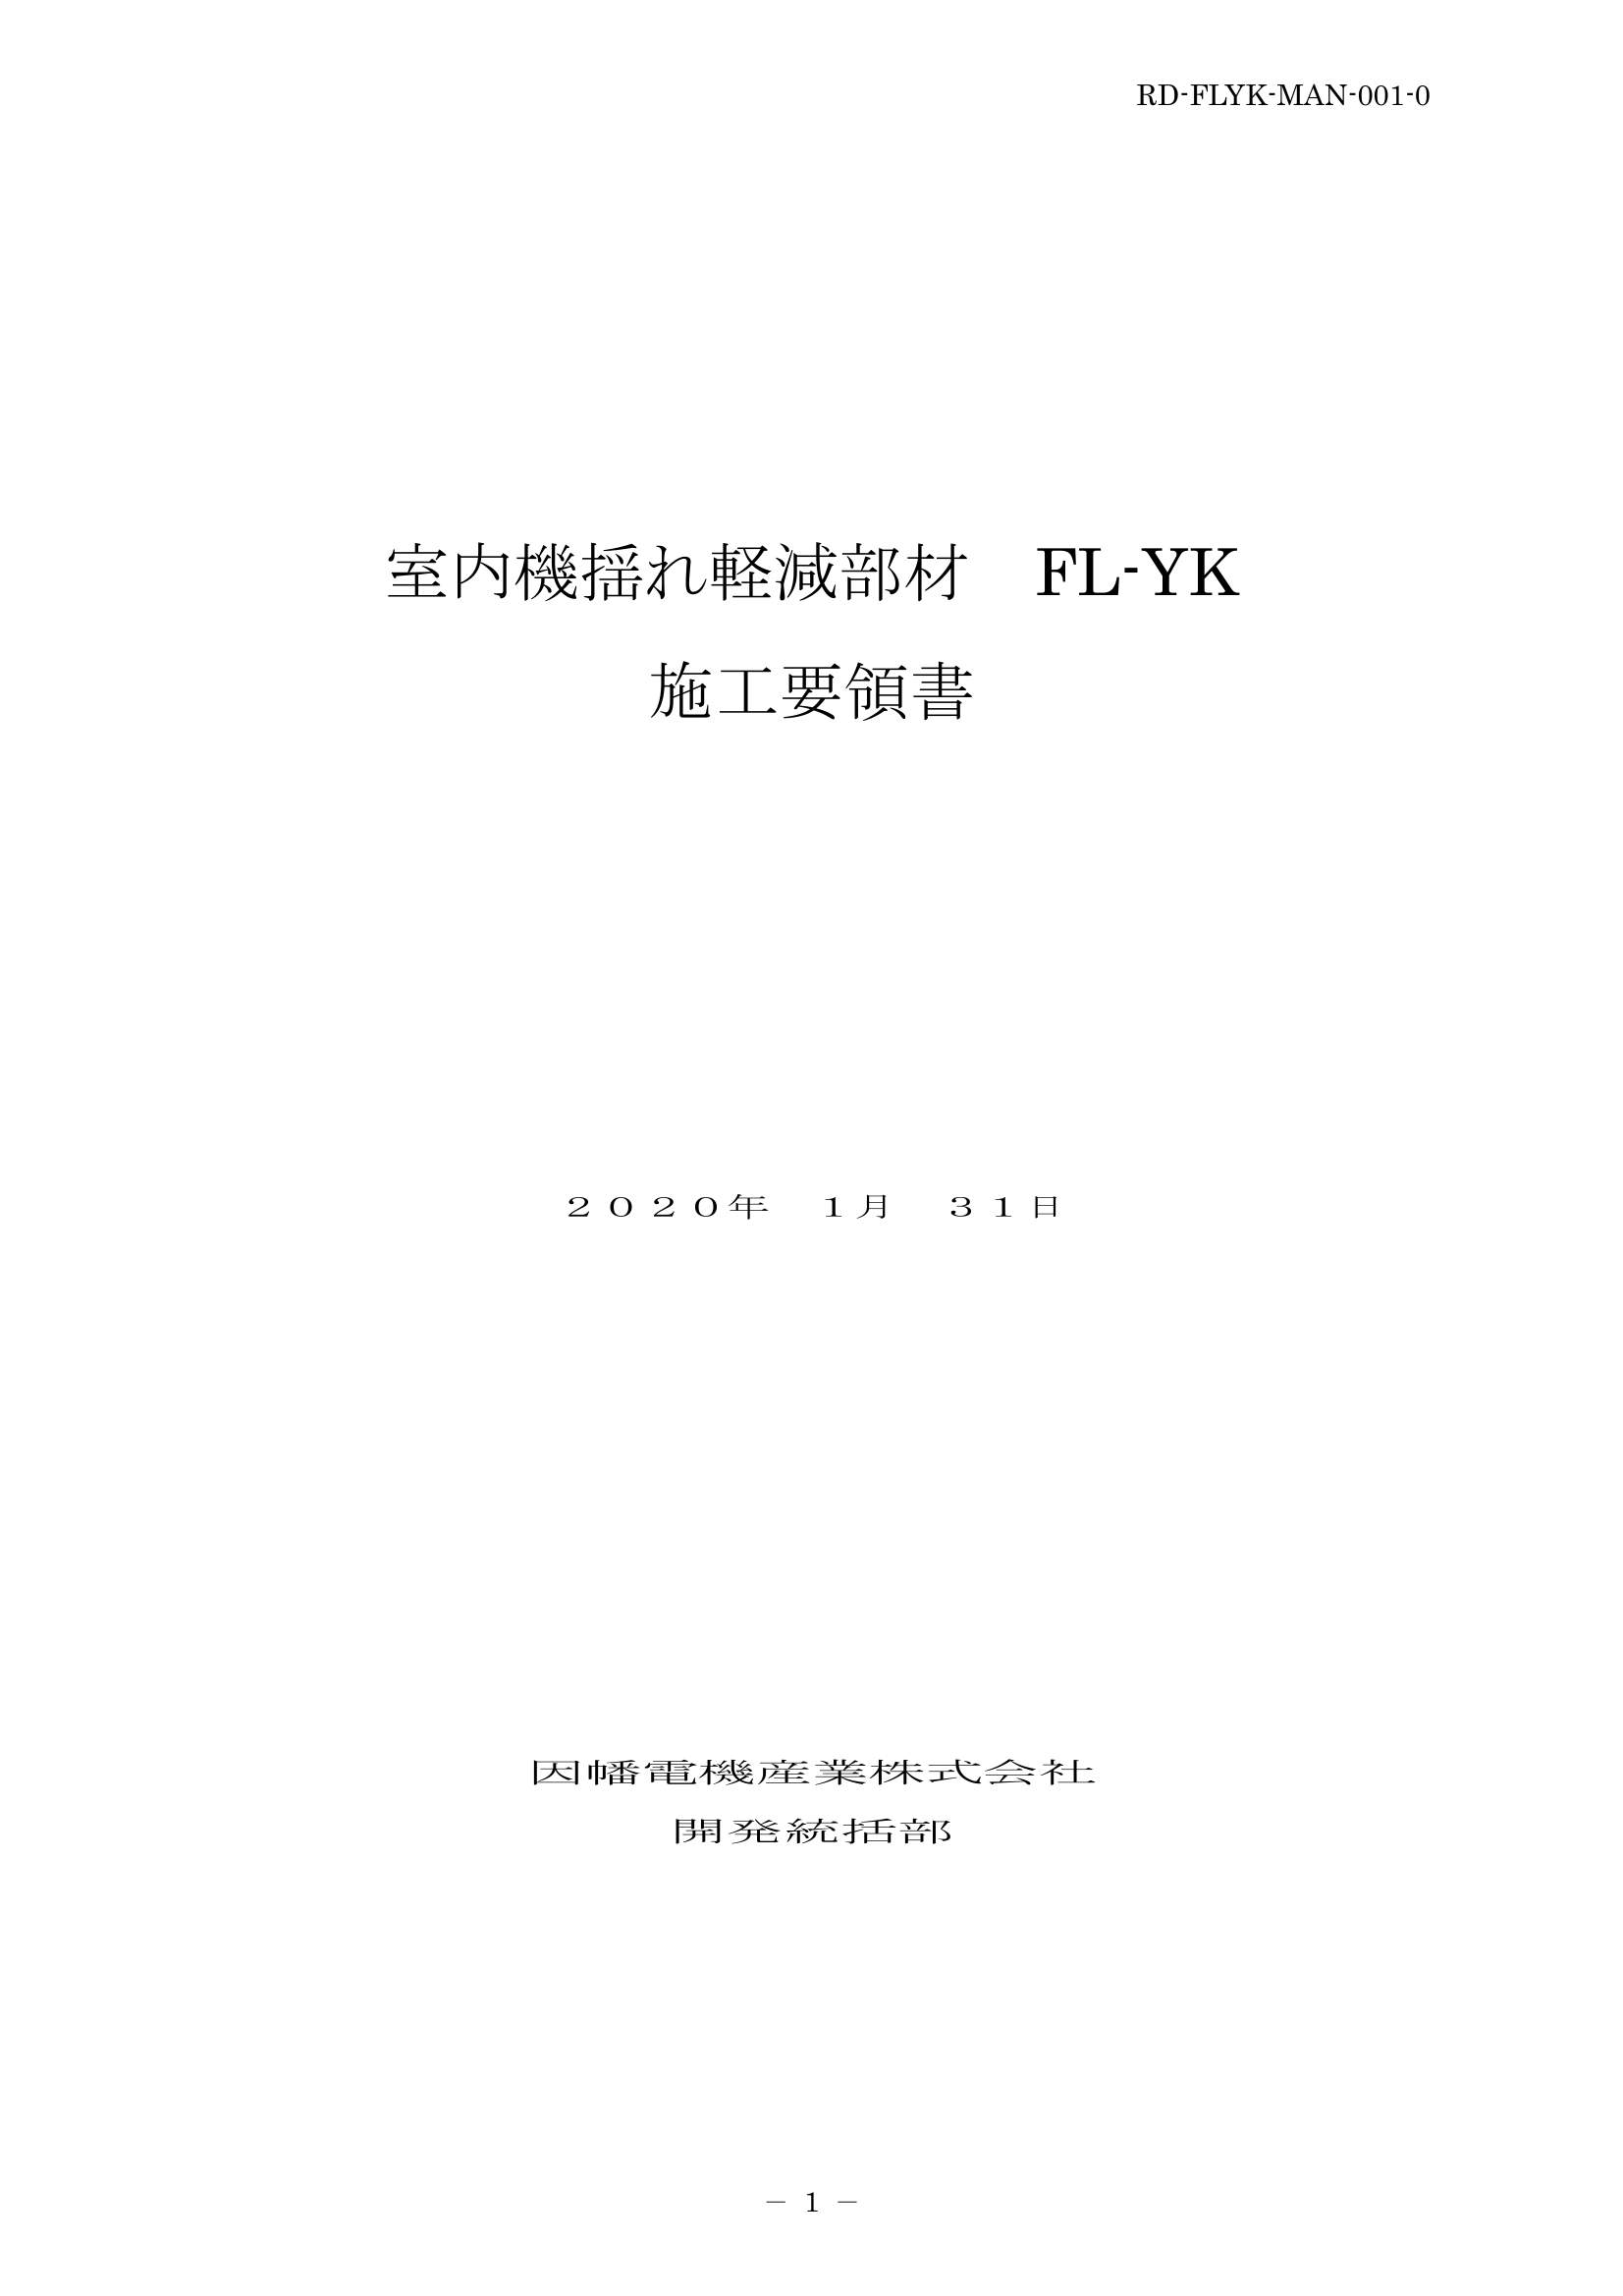 FL-YK_施工要領手順書_20200131.pdf